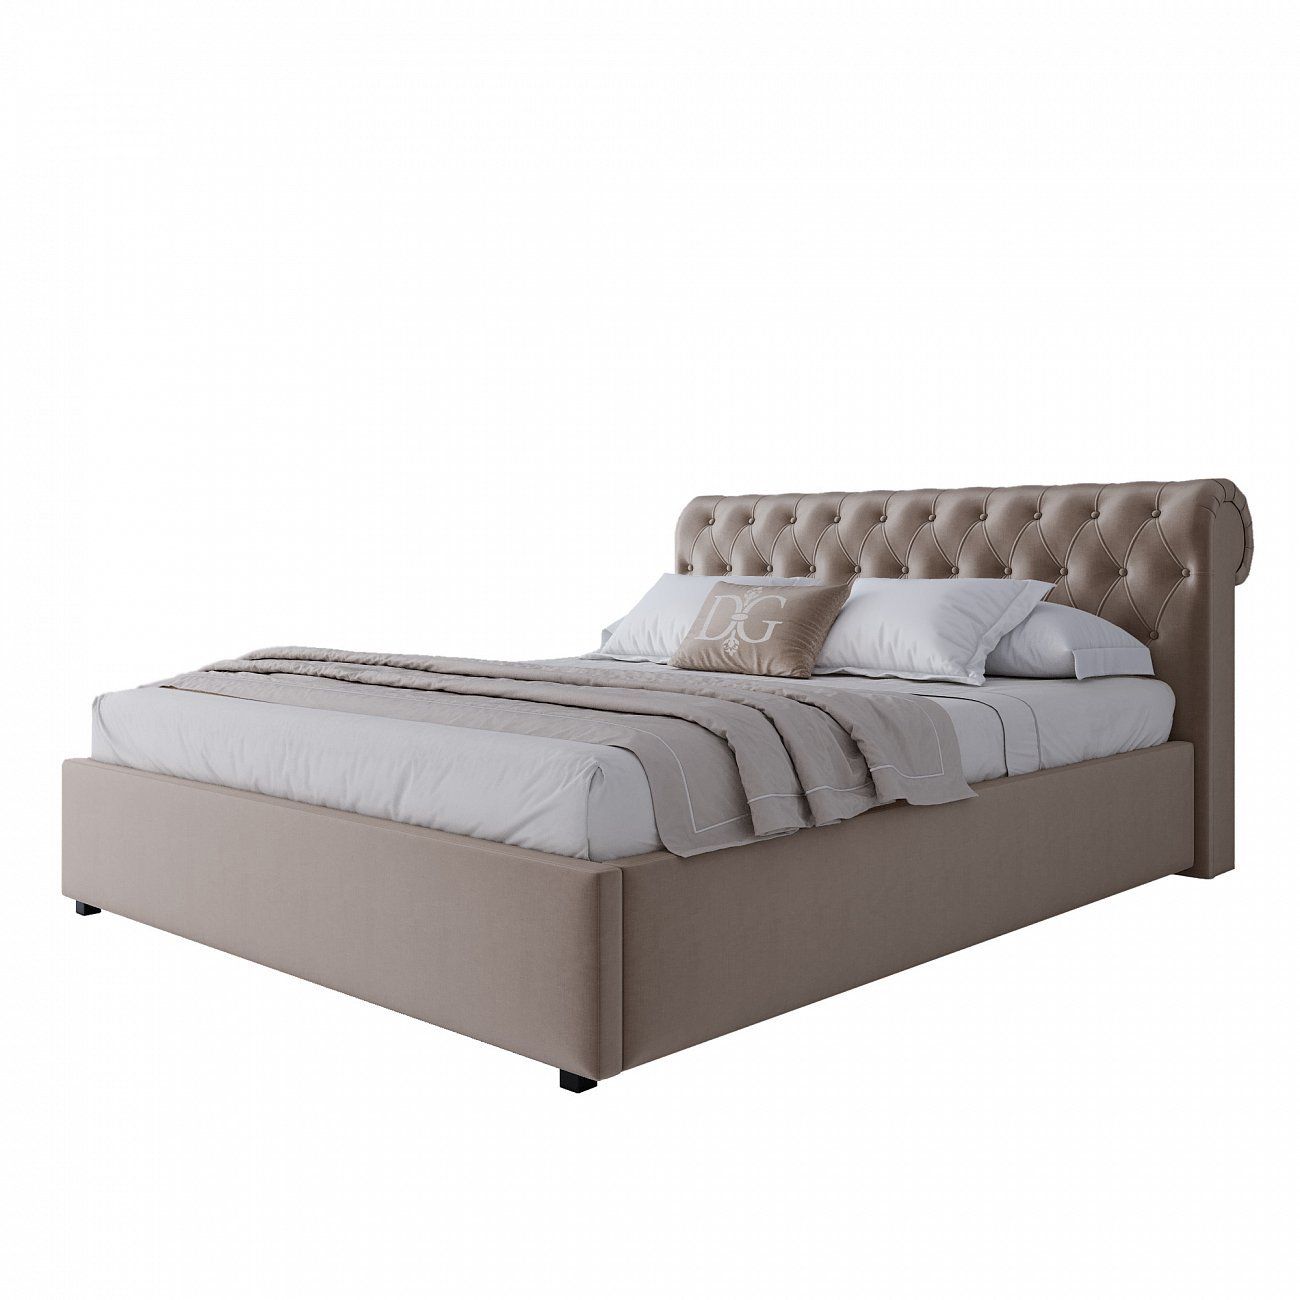 Double bed 160x200 beige velour Sweet Dreams